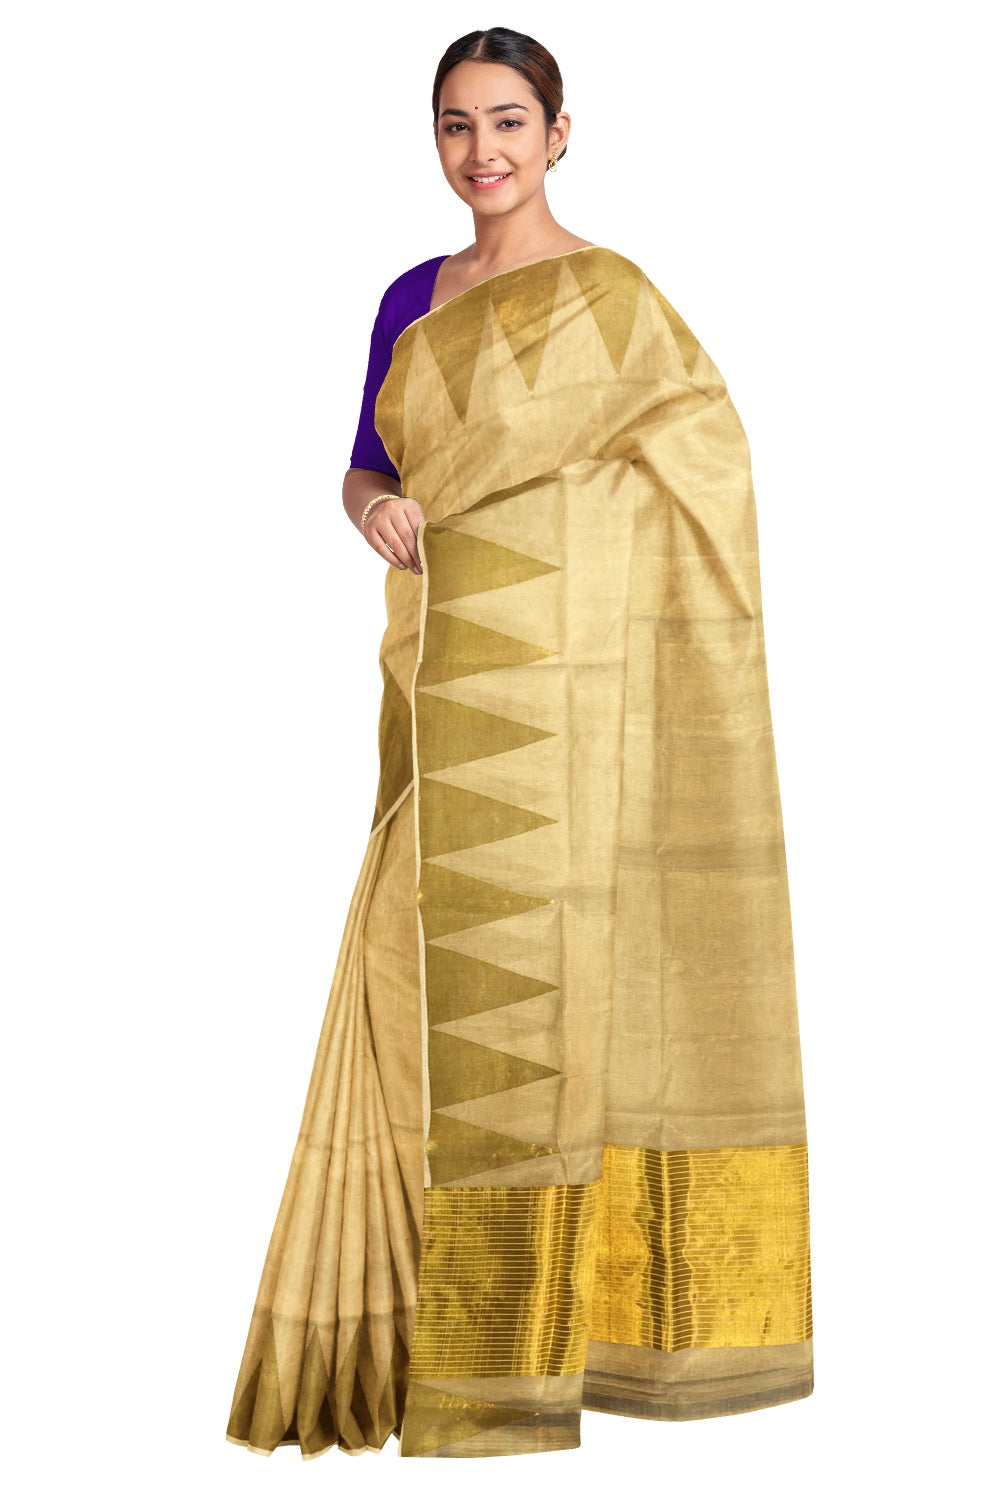 Southloom™ Original Handloom Kasavu Tissue Saree with Unique Temple Design Border